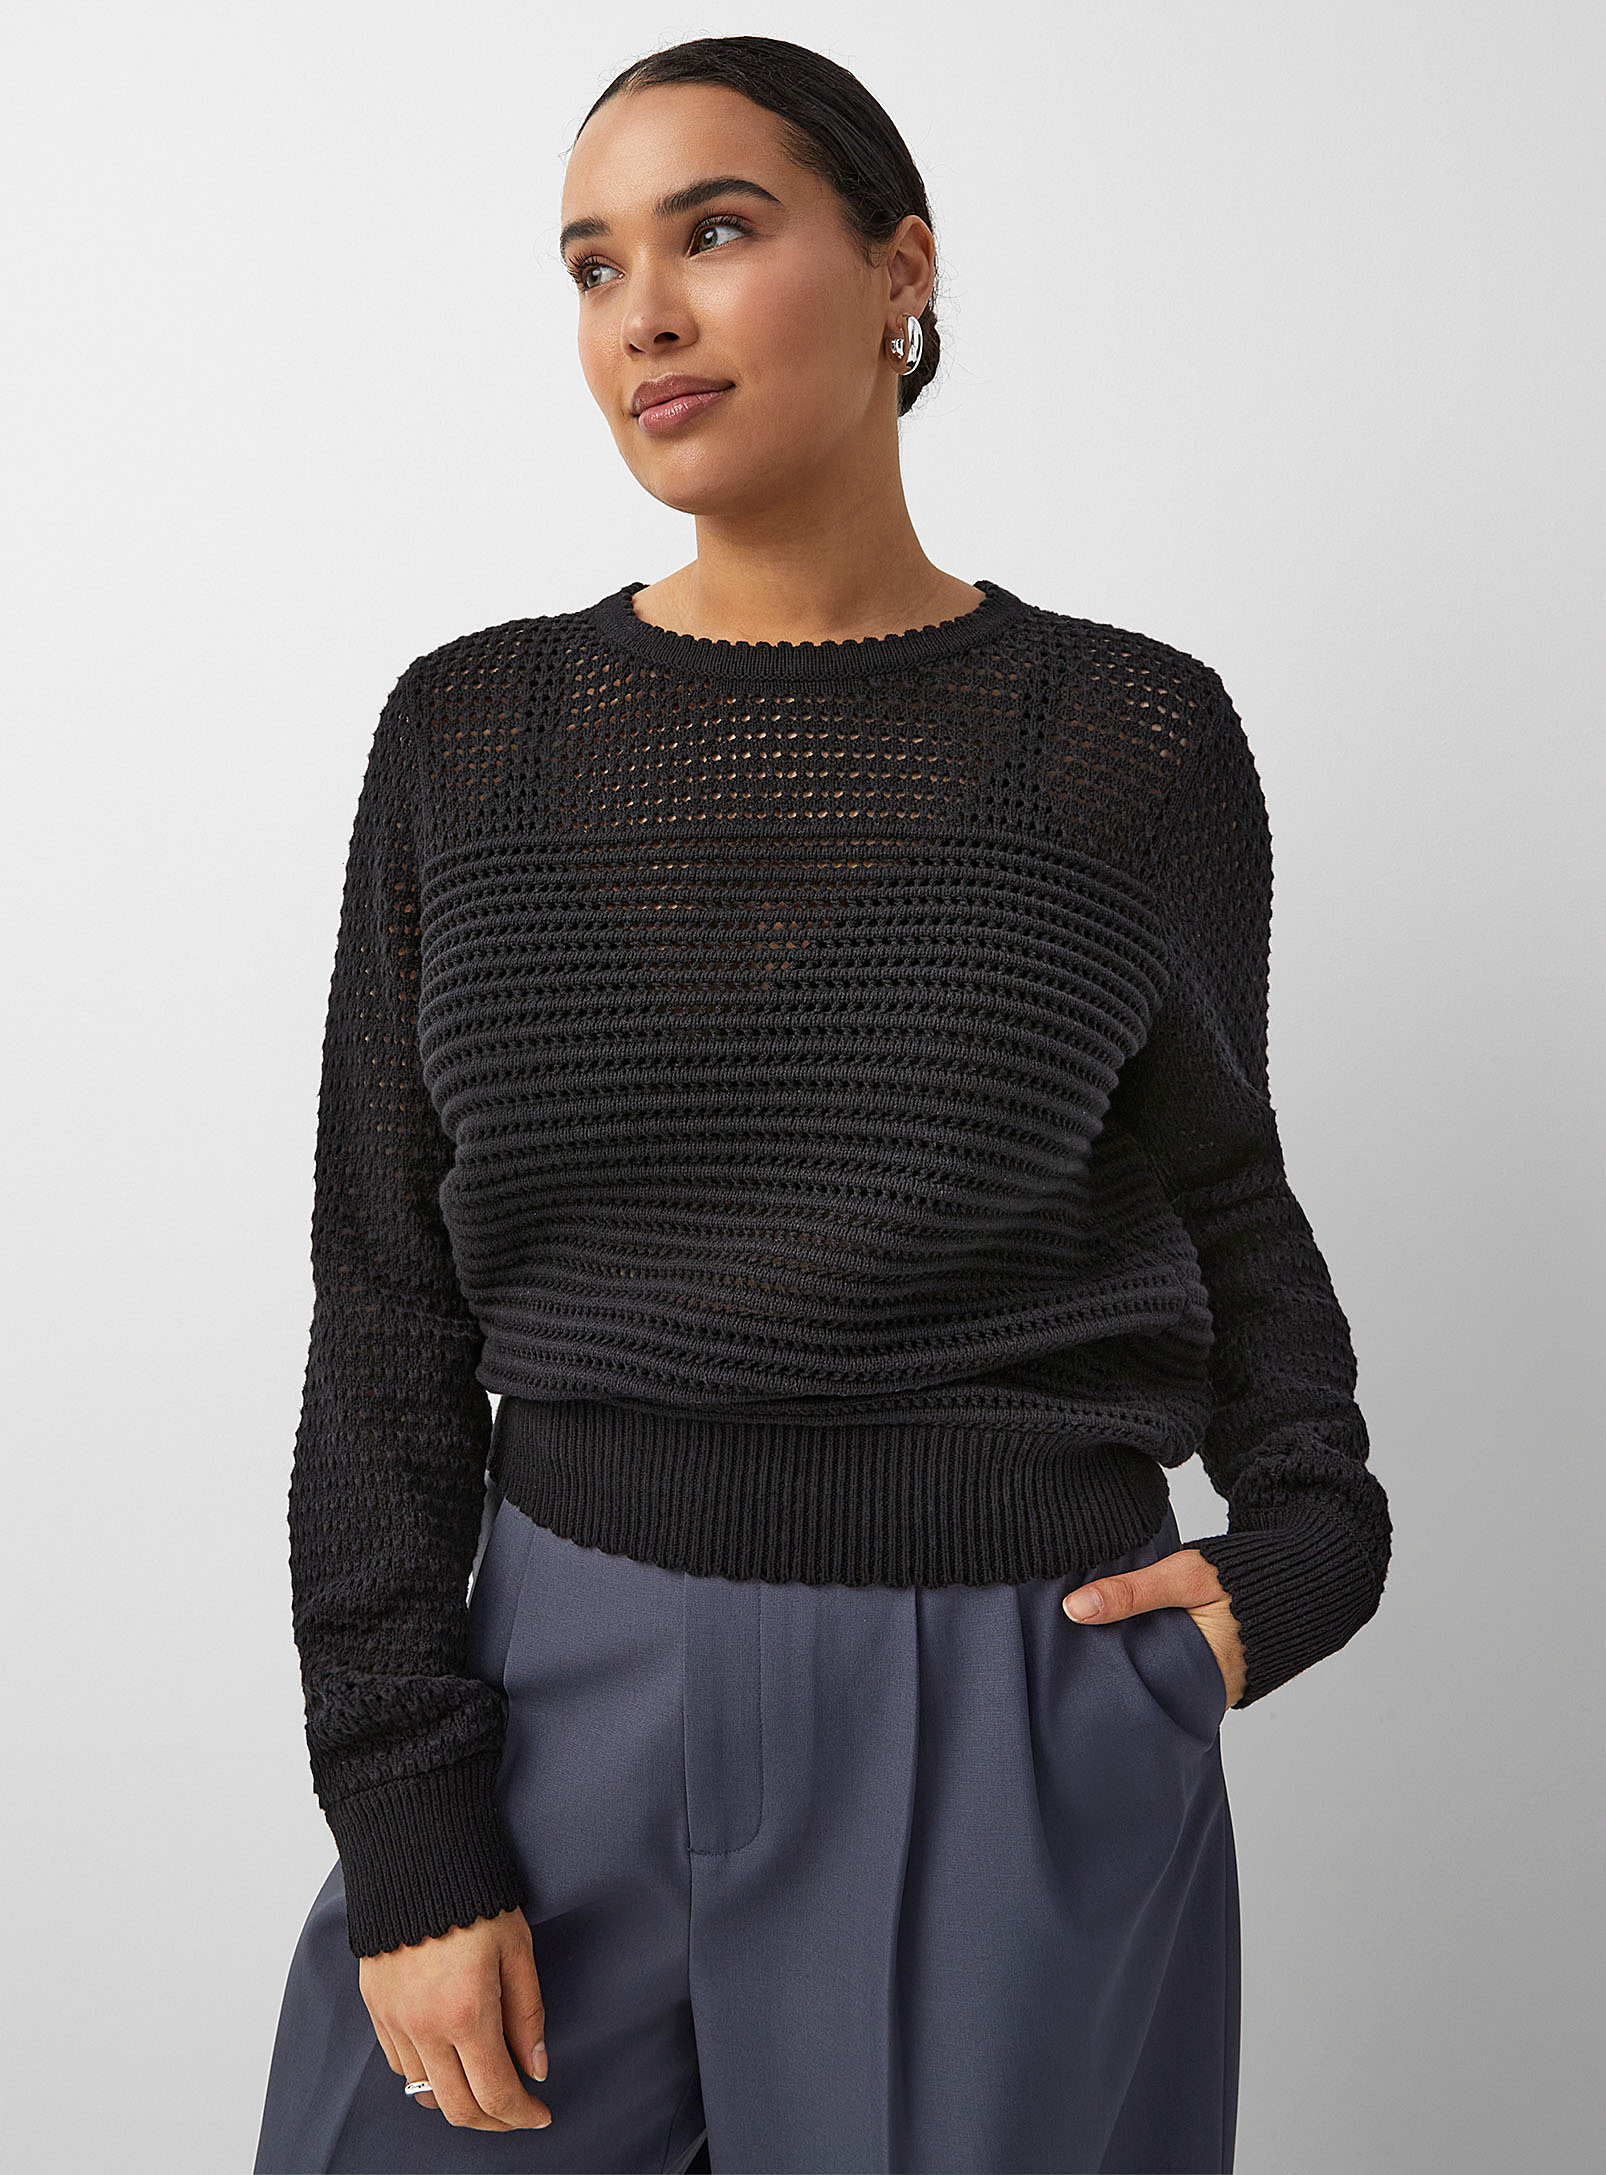 Contemporaine - Women's Scalloped edging openwok sweater